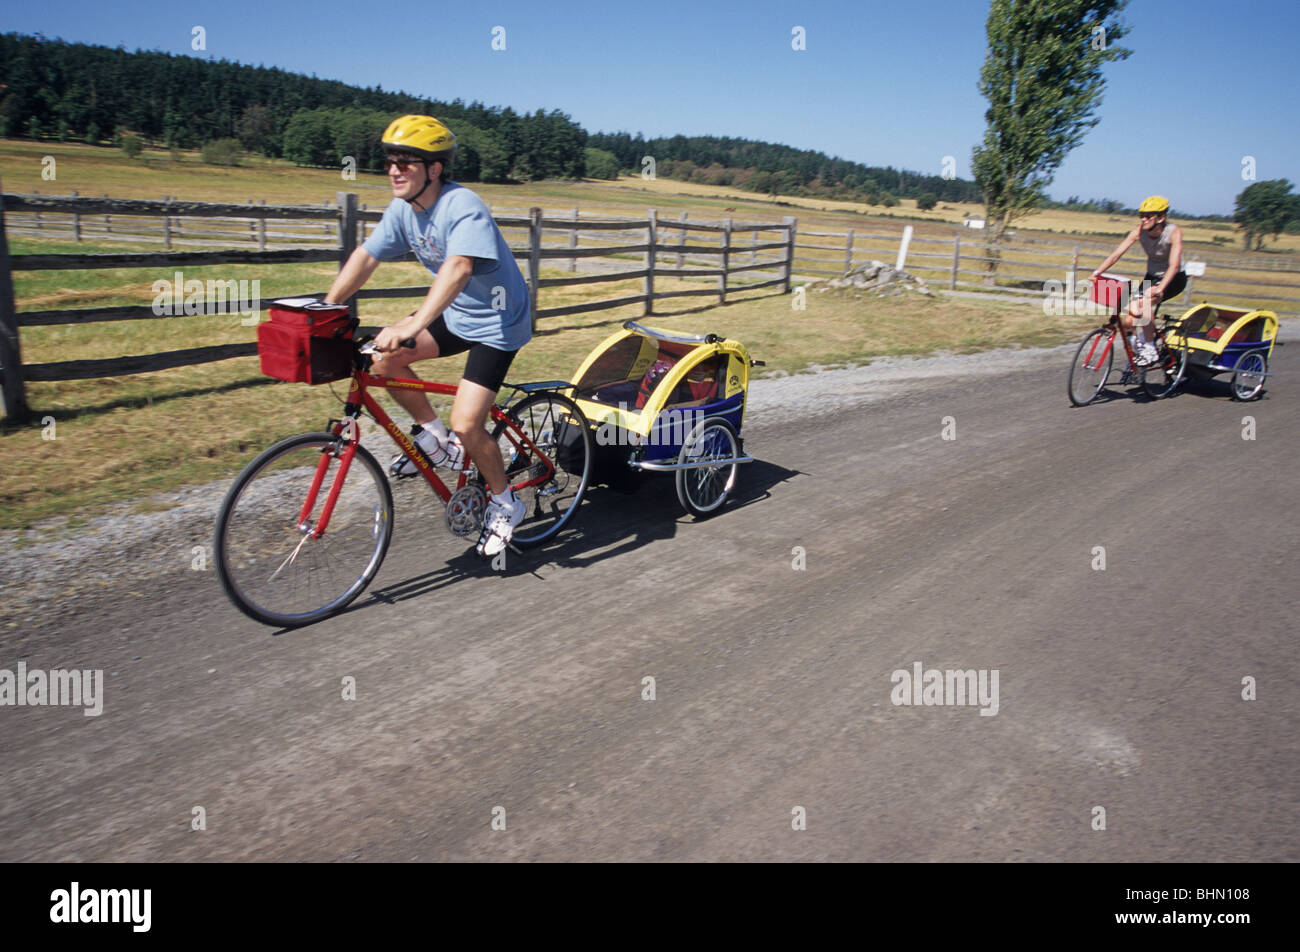 Family riding bikes with children. Stock Photo